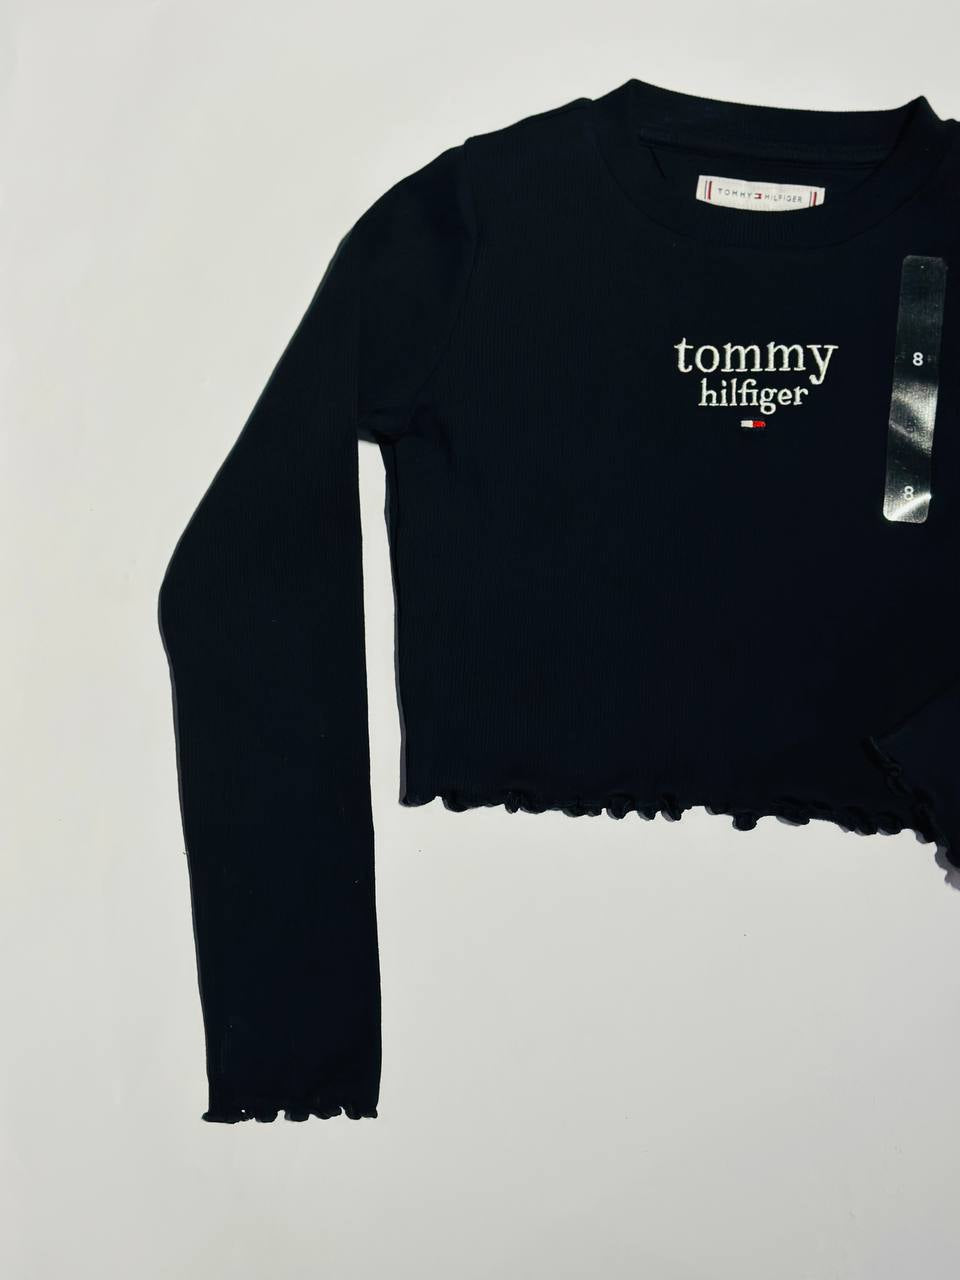 Tommy Hilfiger kids shirt